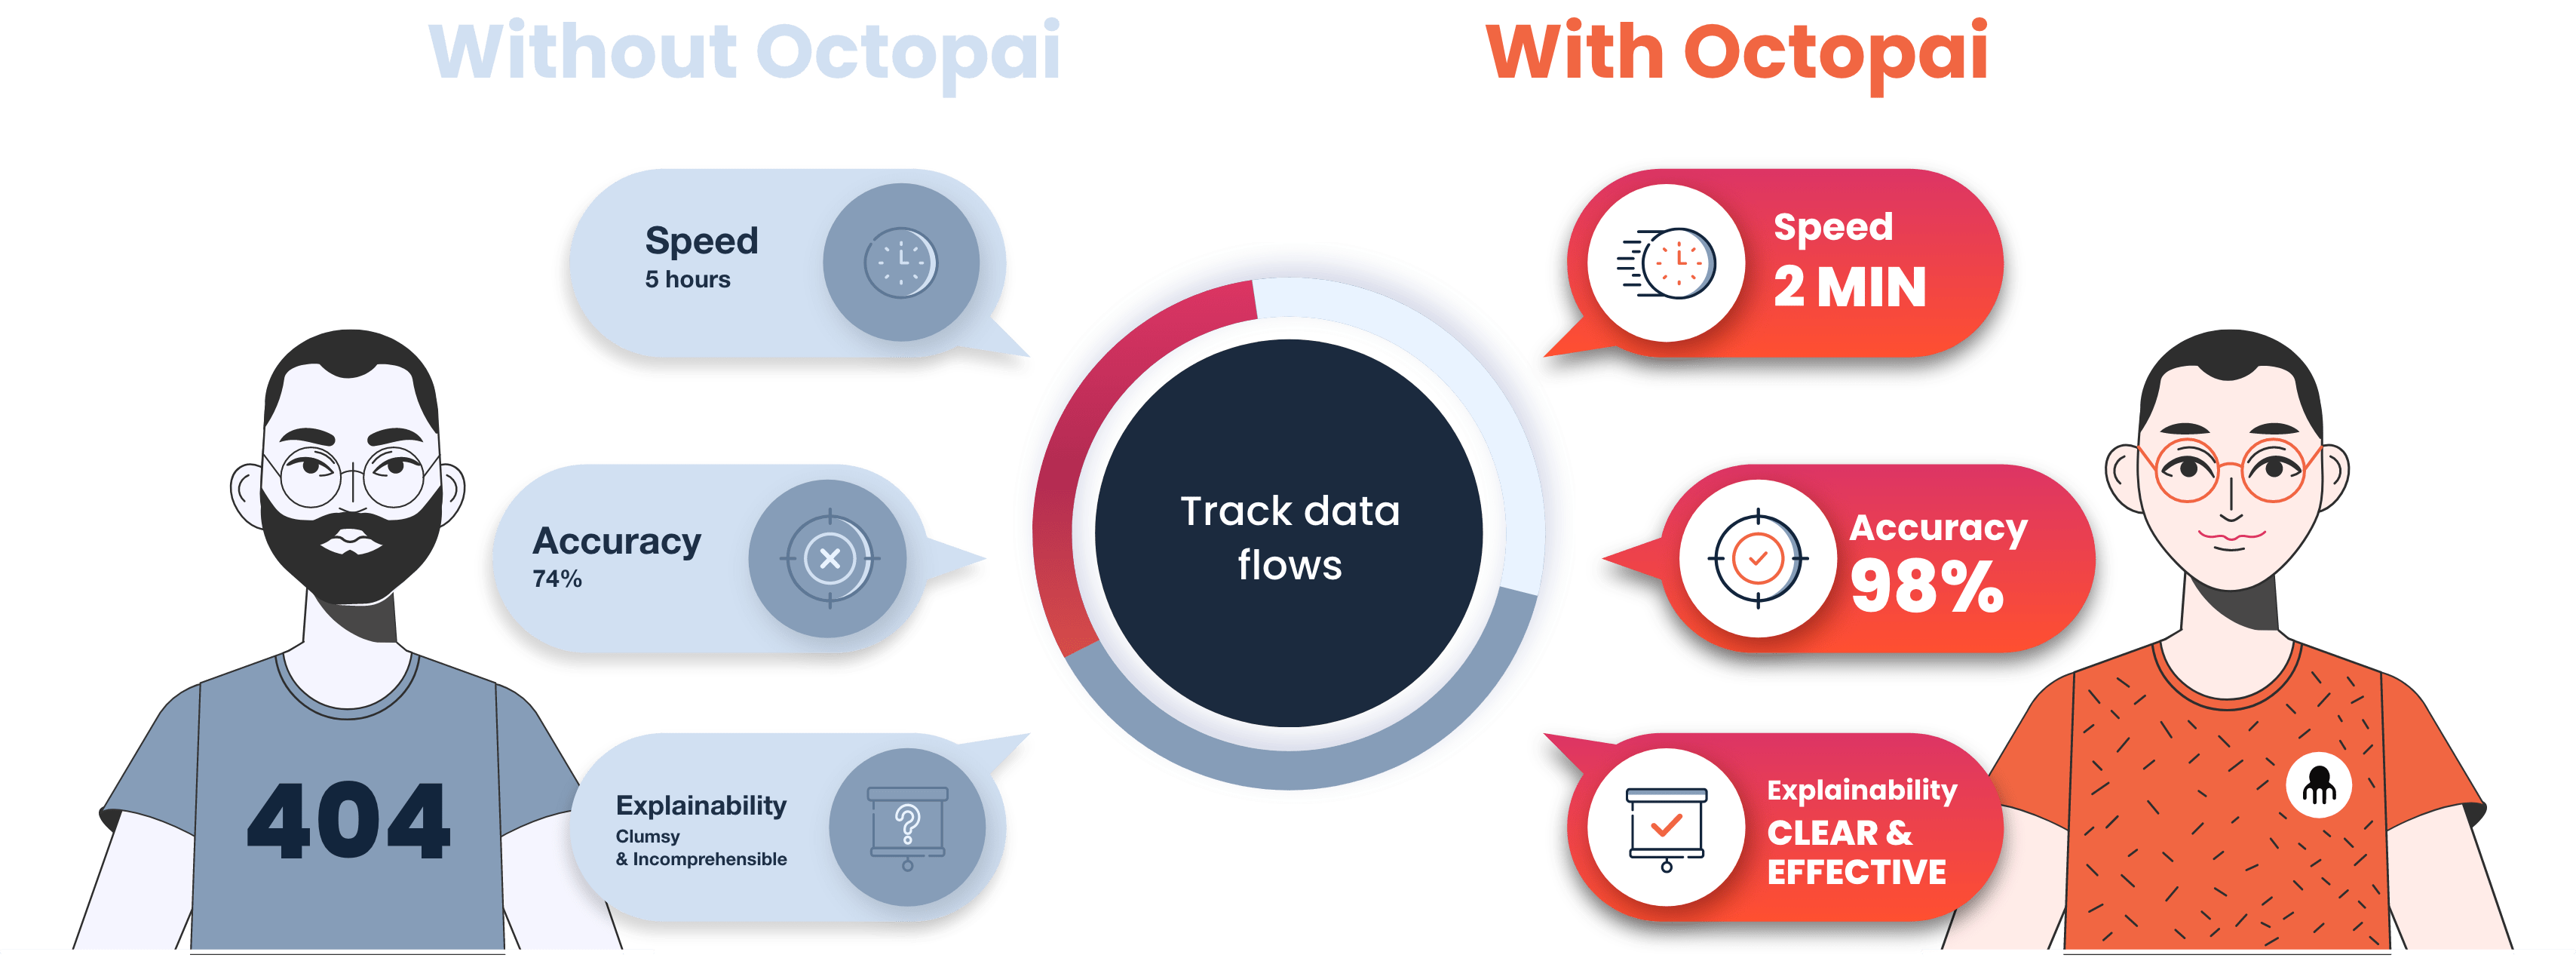 Track data flows